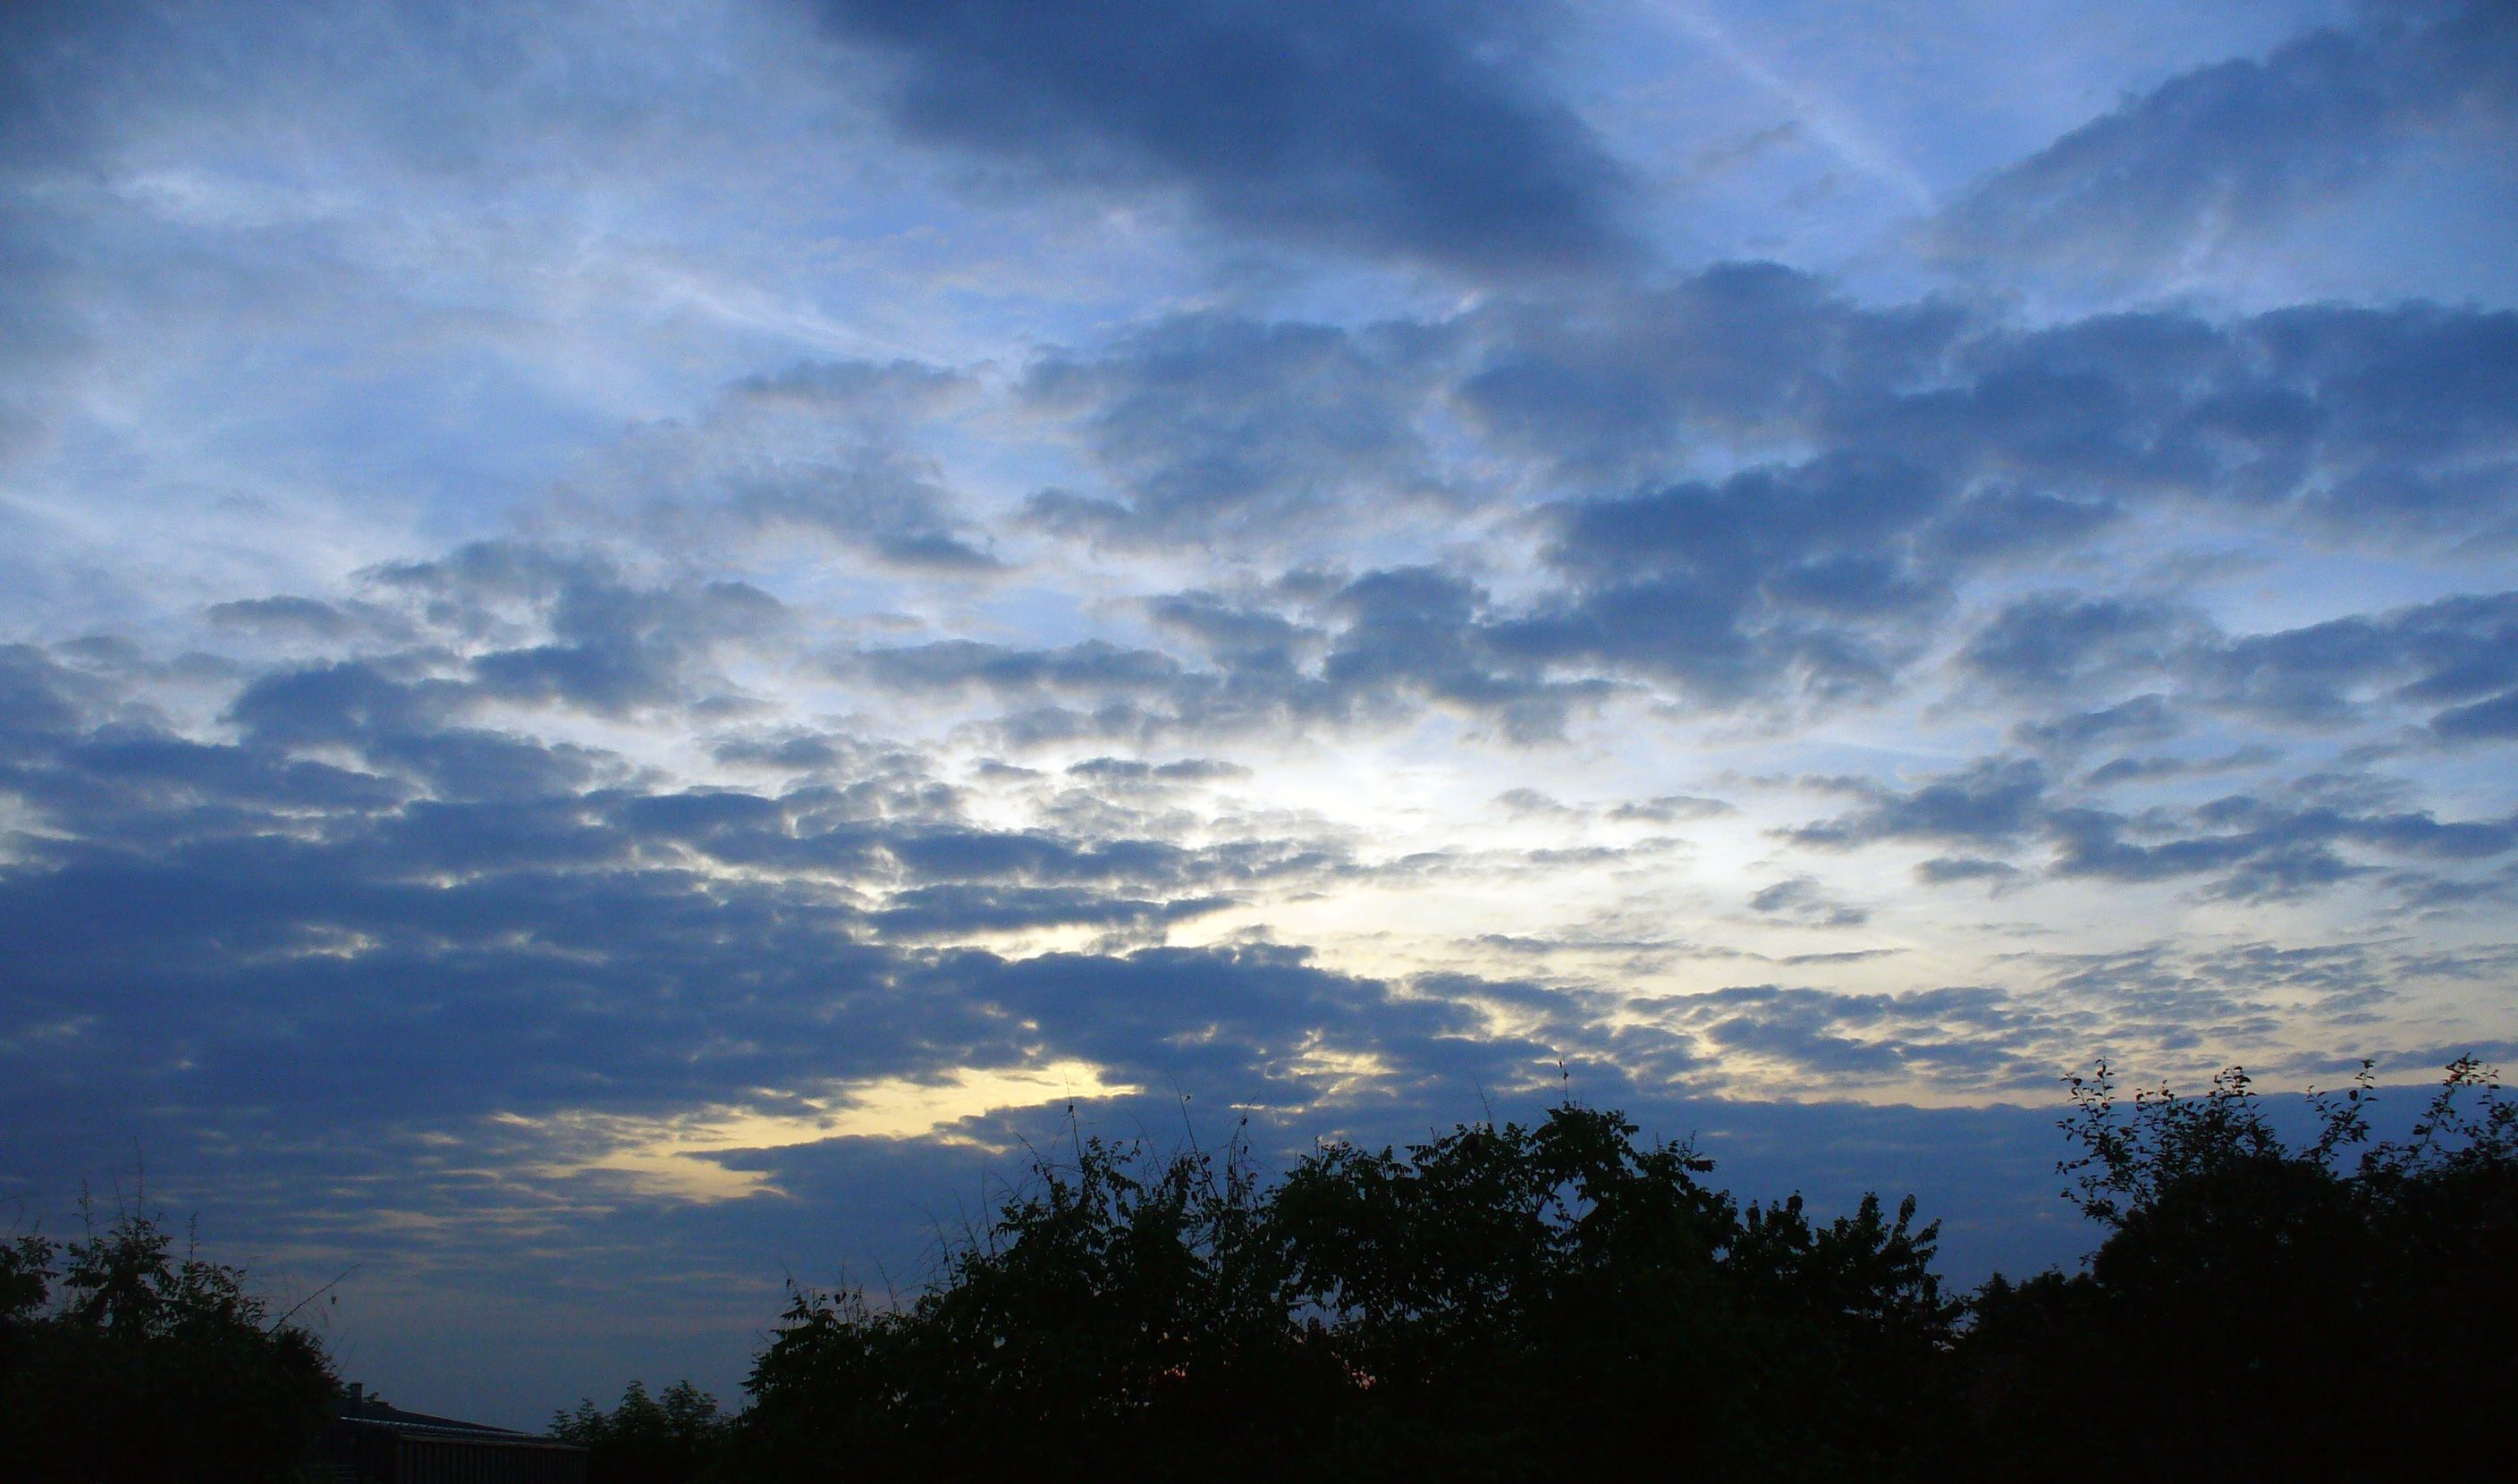 Free Image: Evening clouds | Libreshot Public Domain Photos